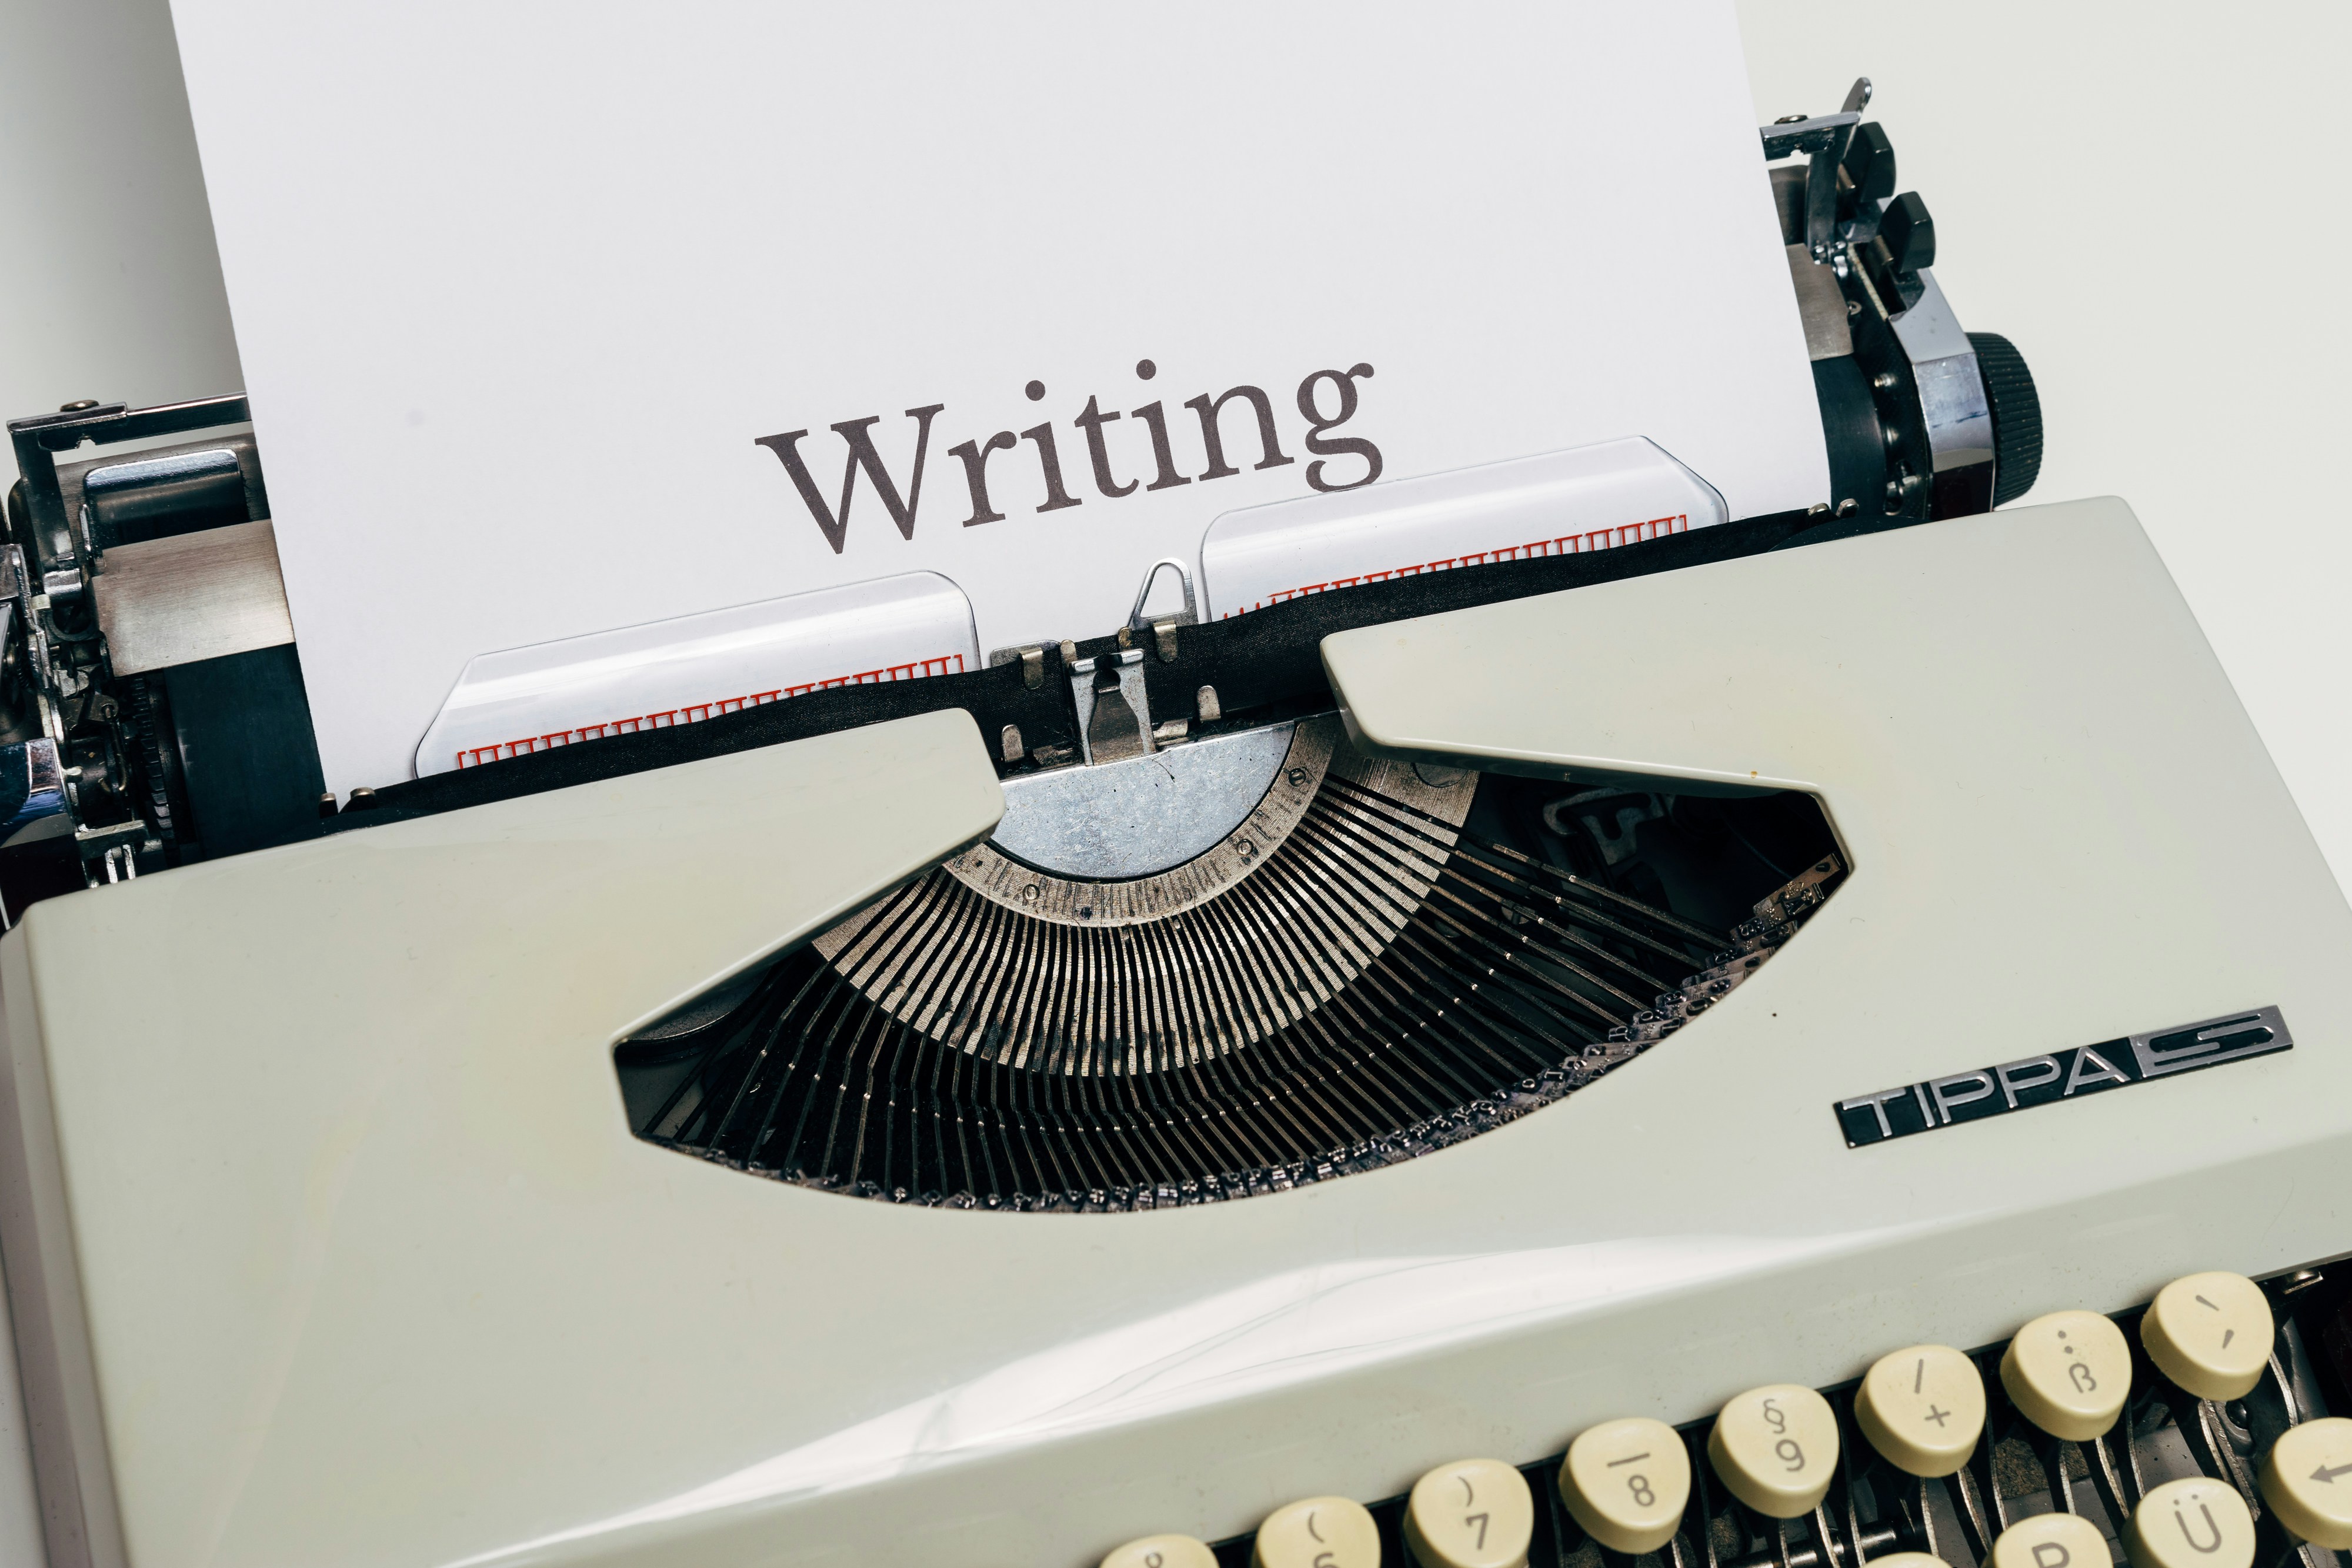 Typewriiter for article writing